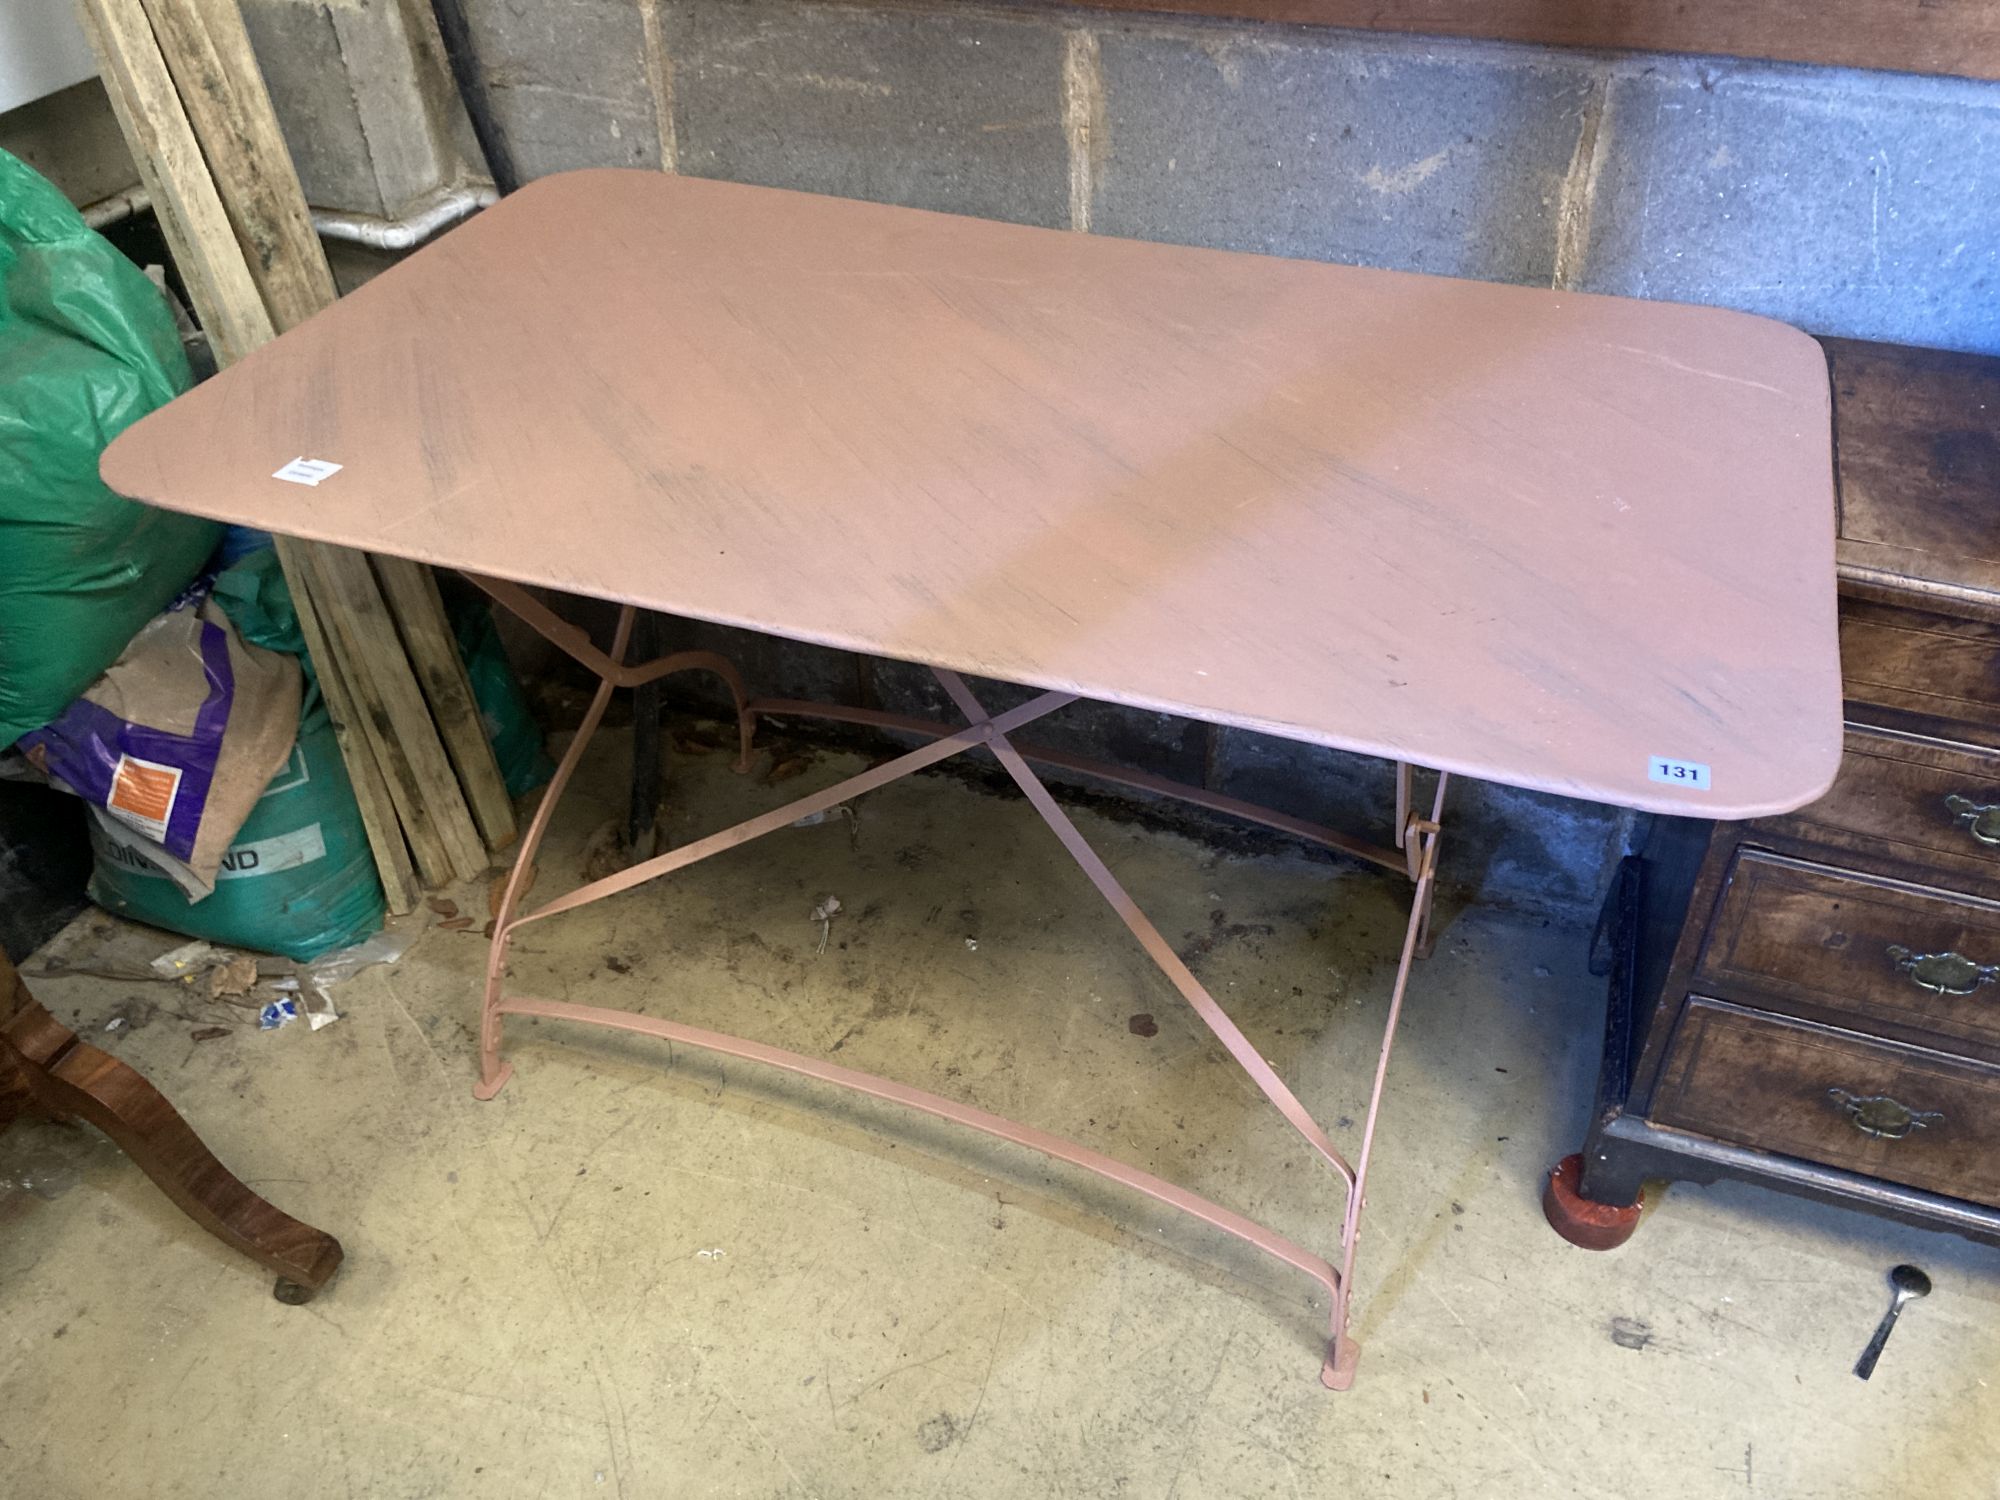 A painted metal folding garden table, width 124cm, depth 72cm, height 74cm